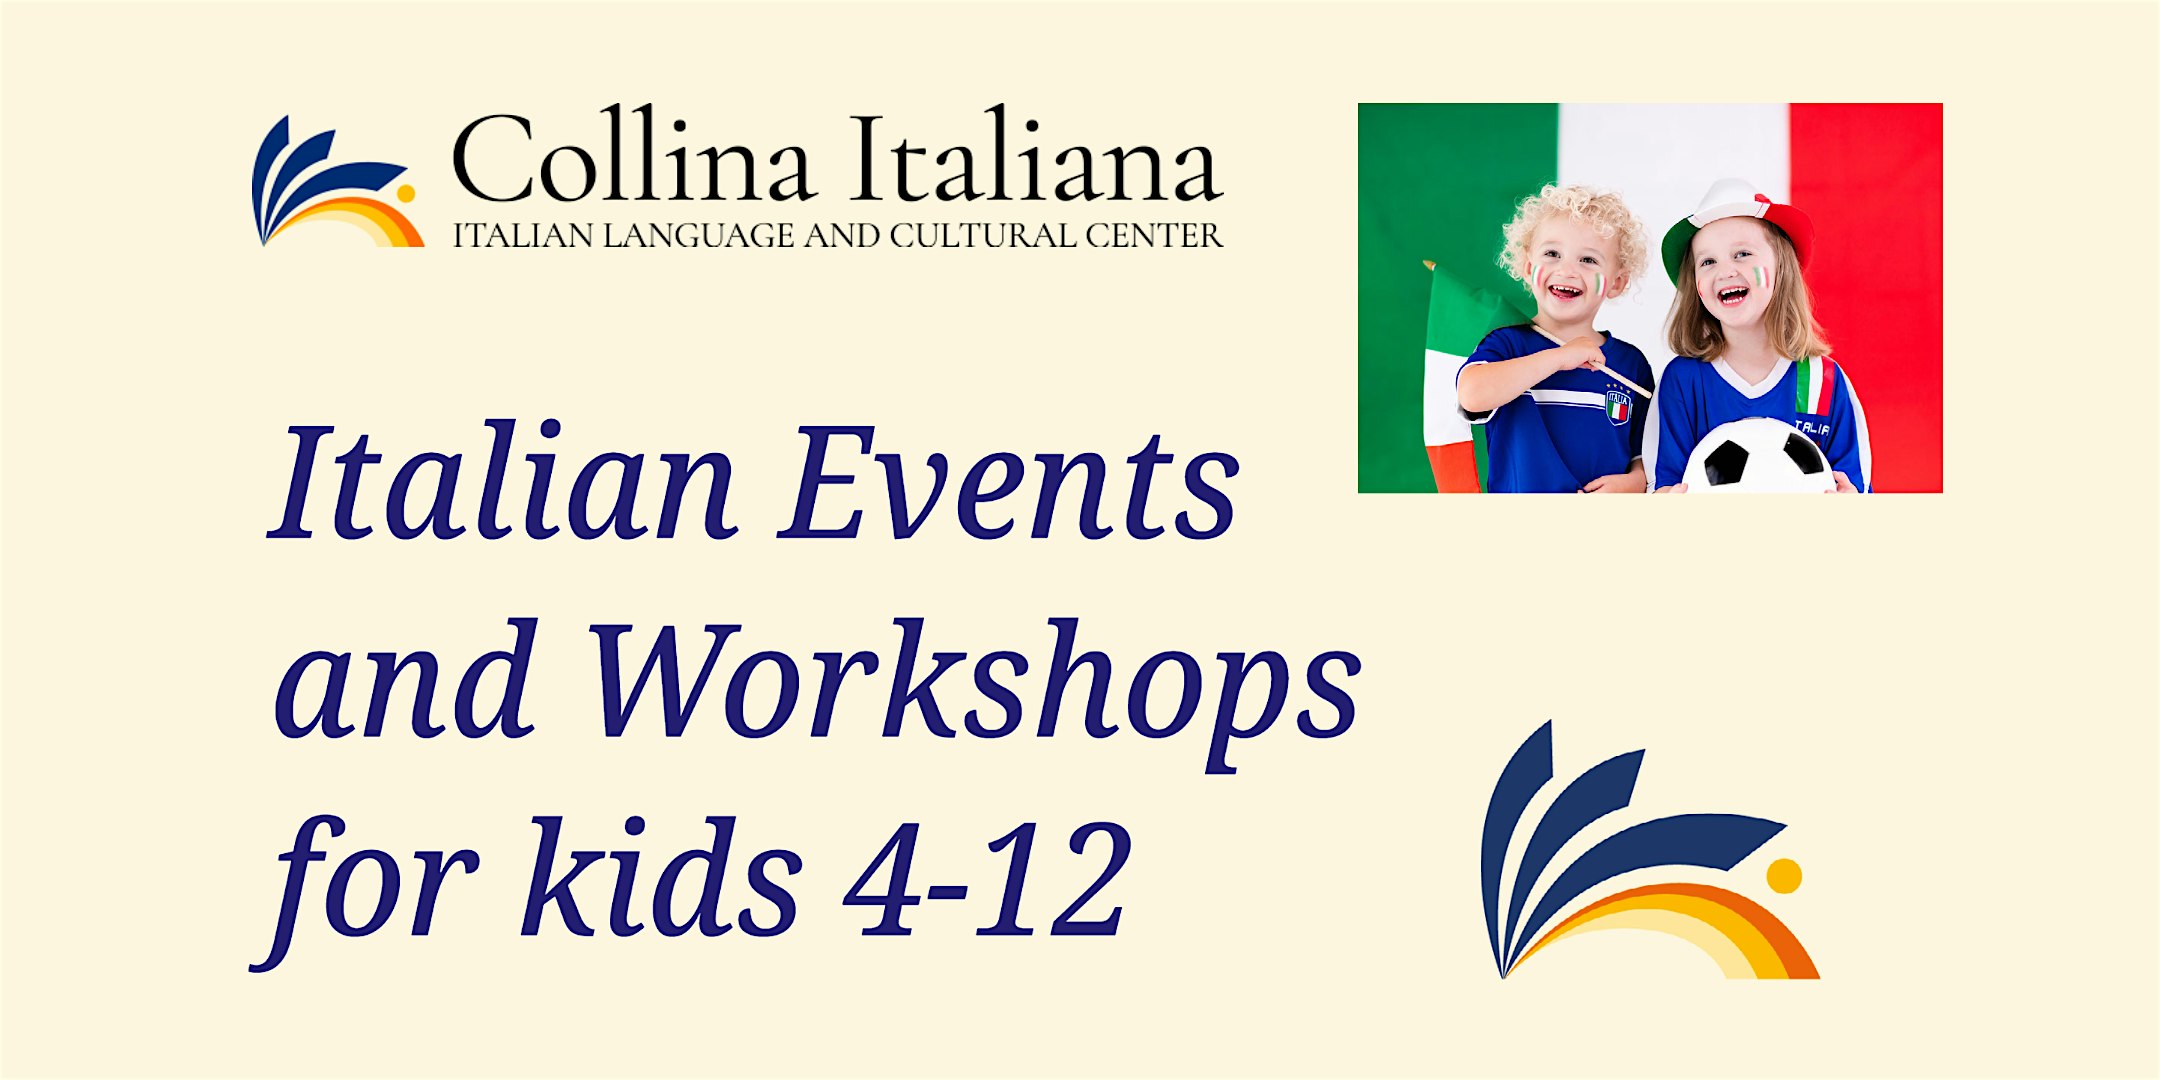 Italian Events for Kids (4-12) - PASQUA (EASTER)